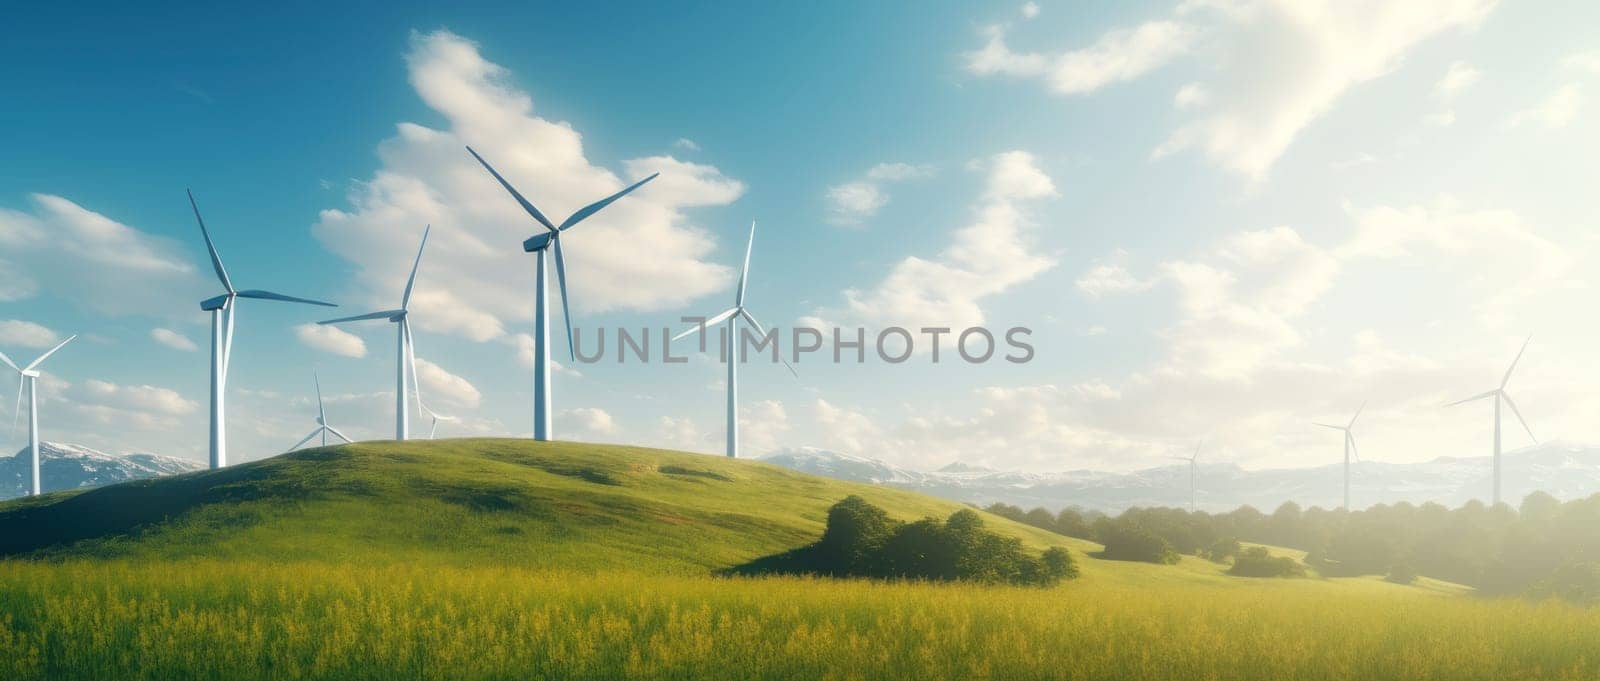 Wind turbines in the field by simpson33